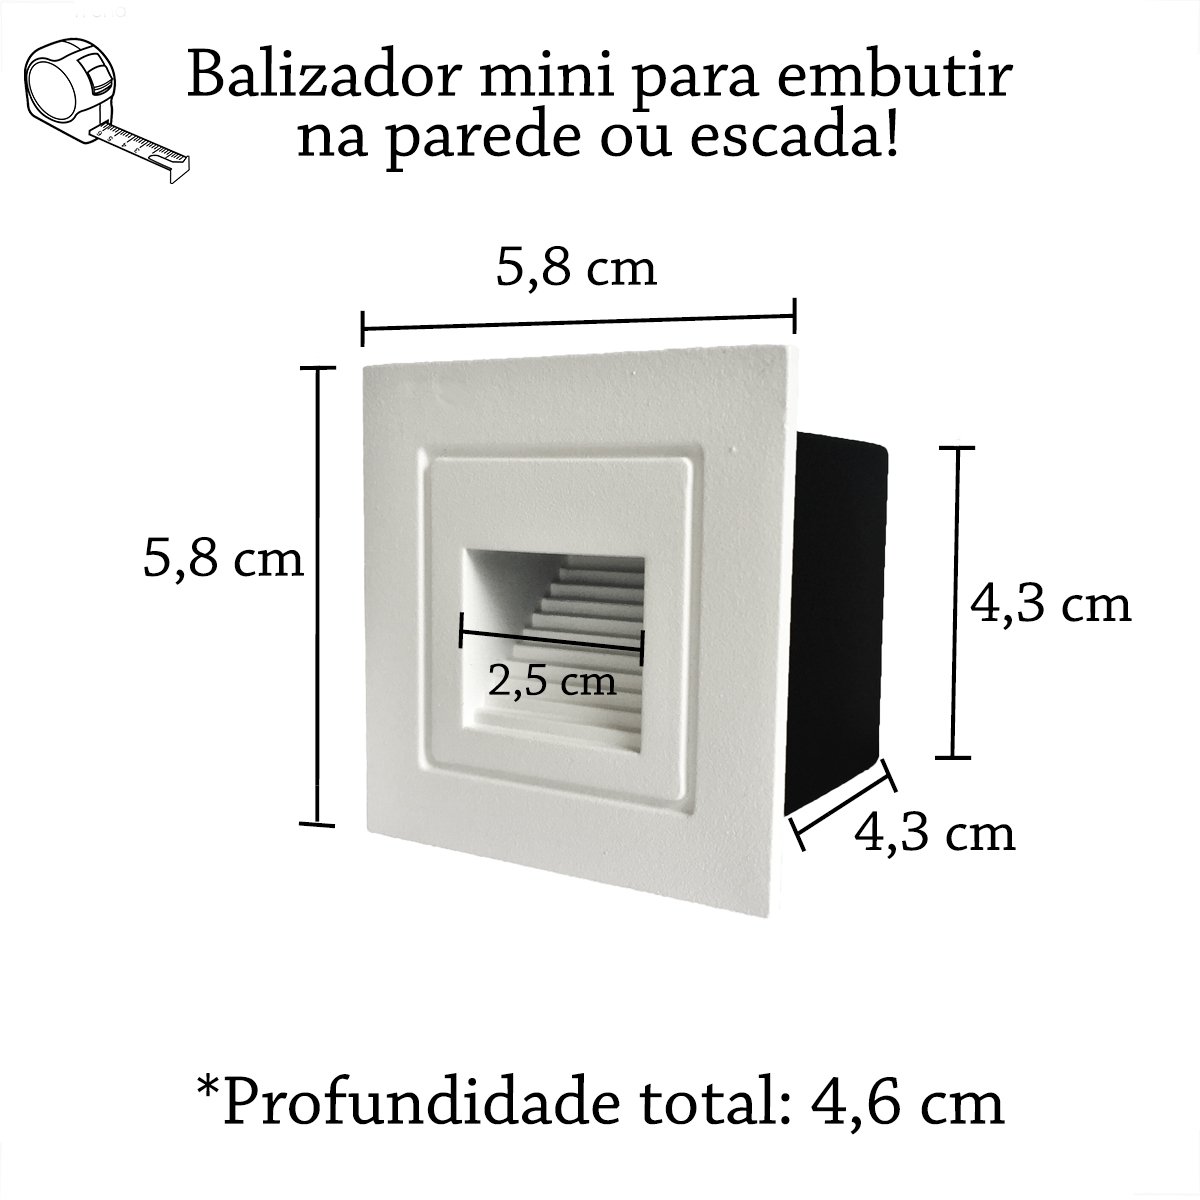 2 Balizador De Parede Branco Mini Embutido Garagem Lup75 - 6